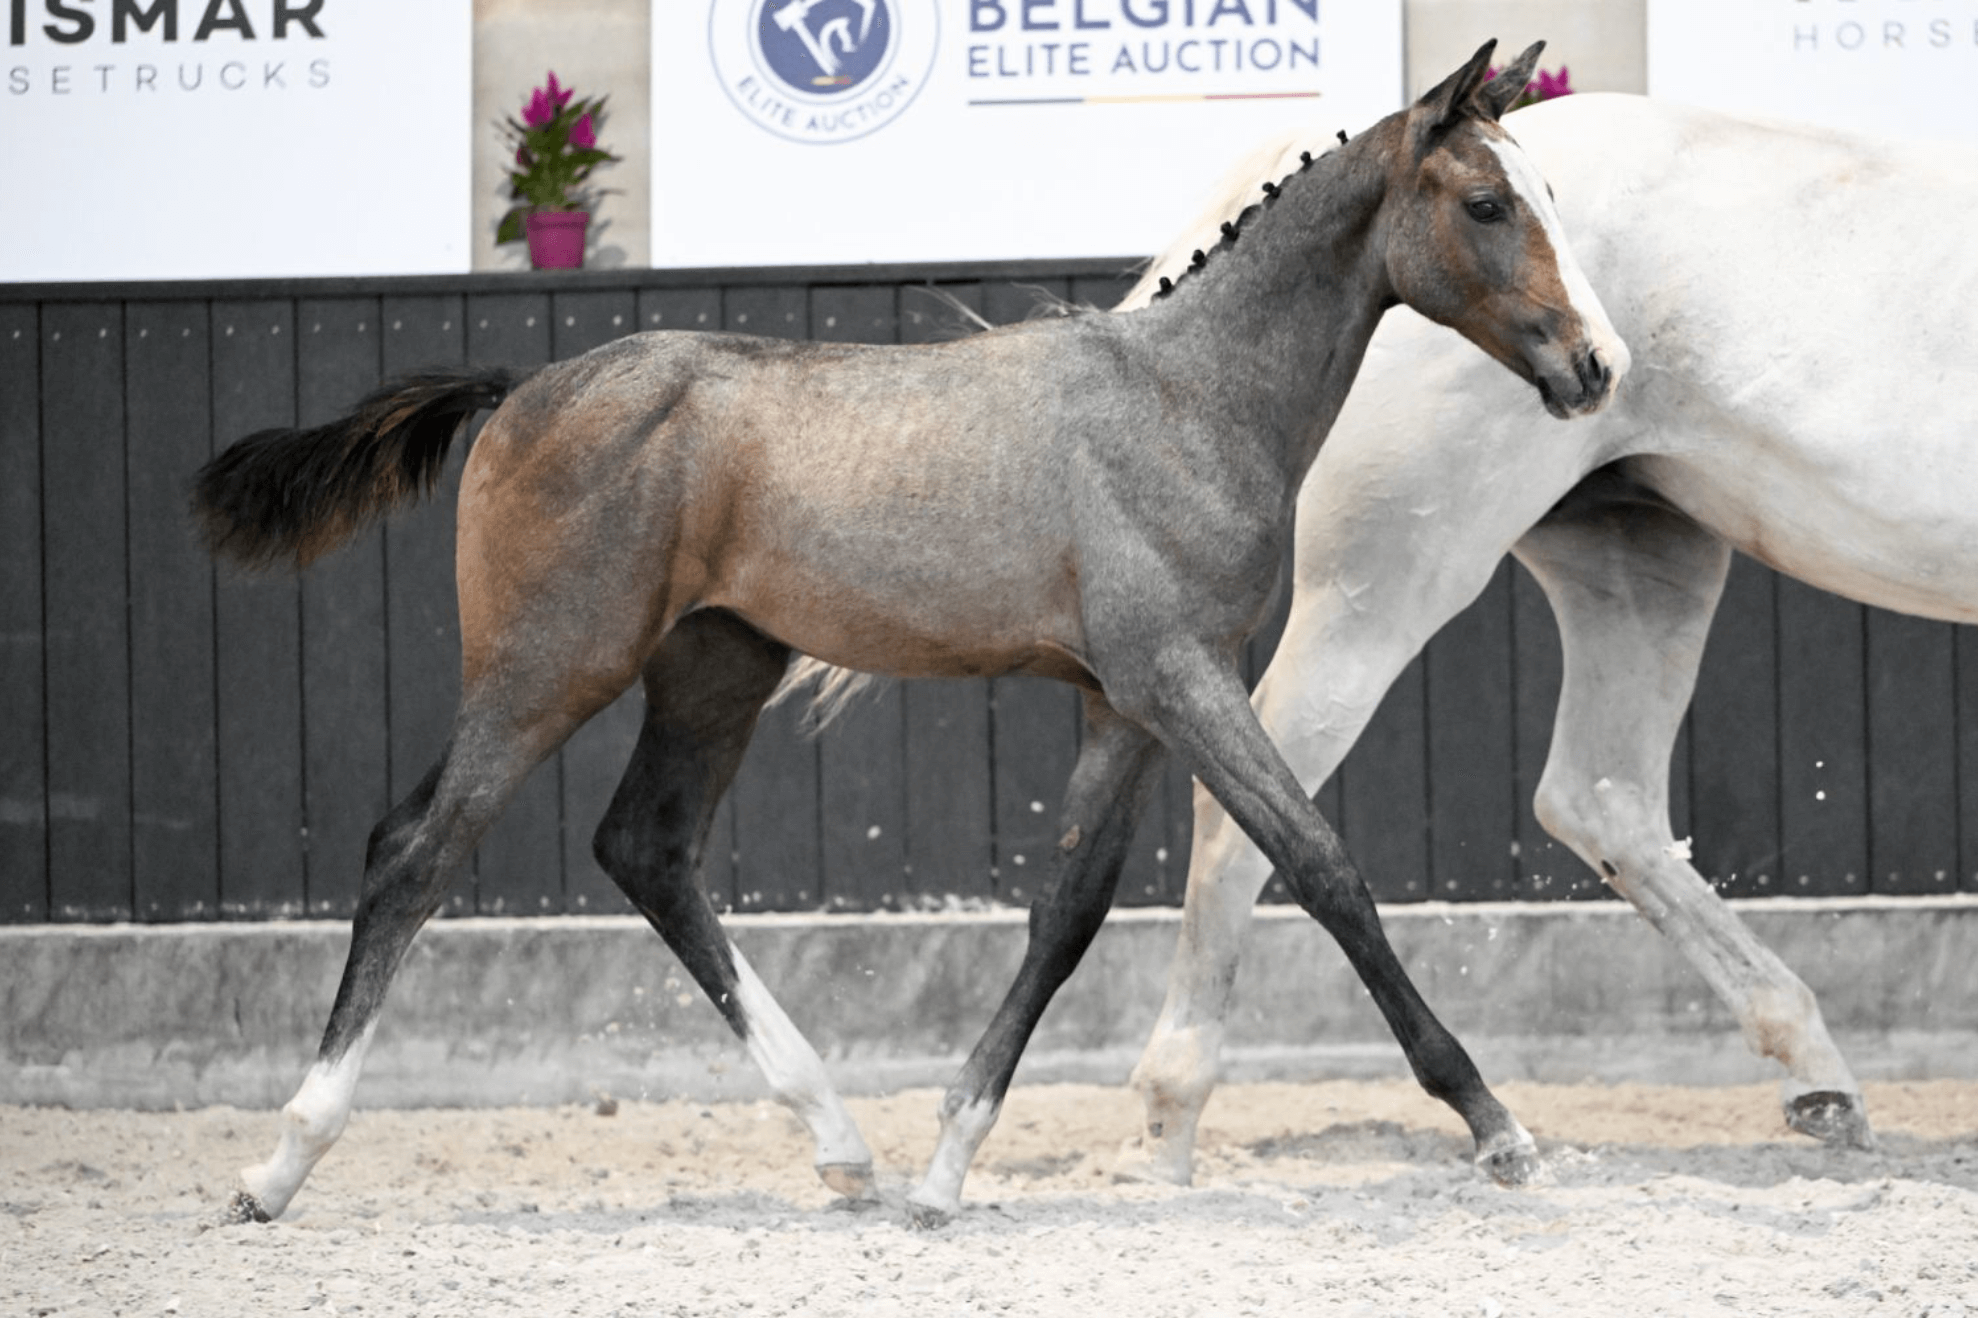 Belgian Elite Auction: Discover the future of Belgian Breeding!